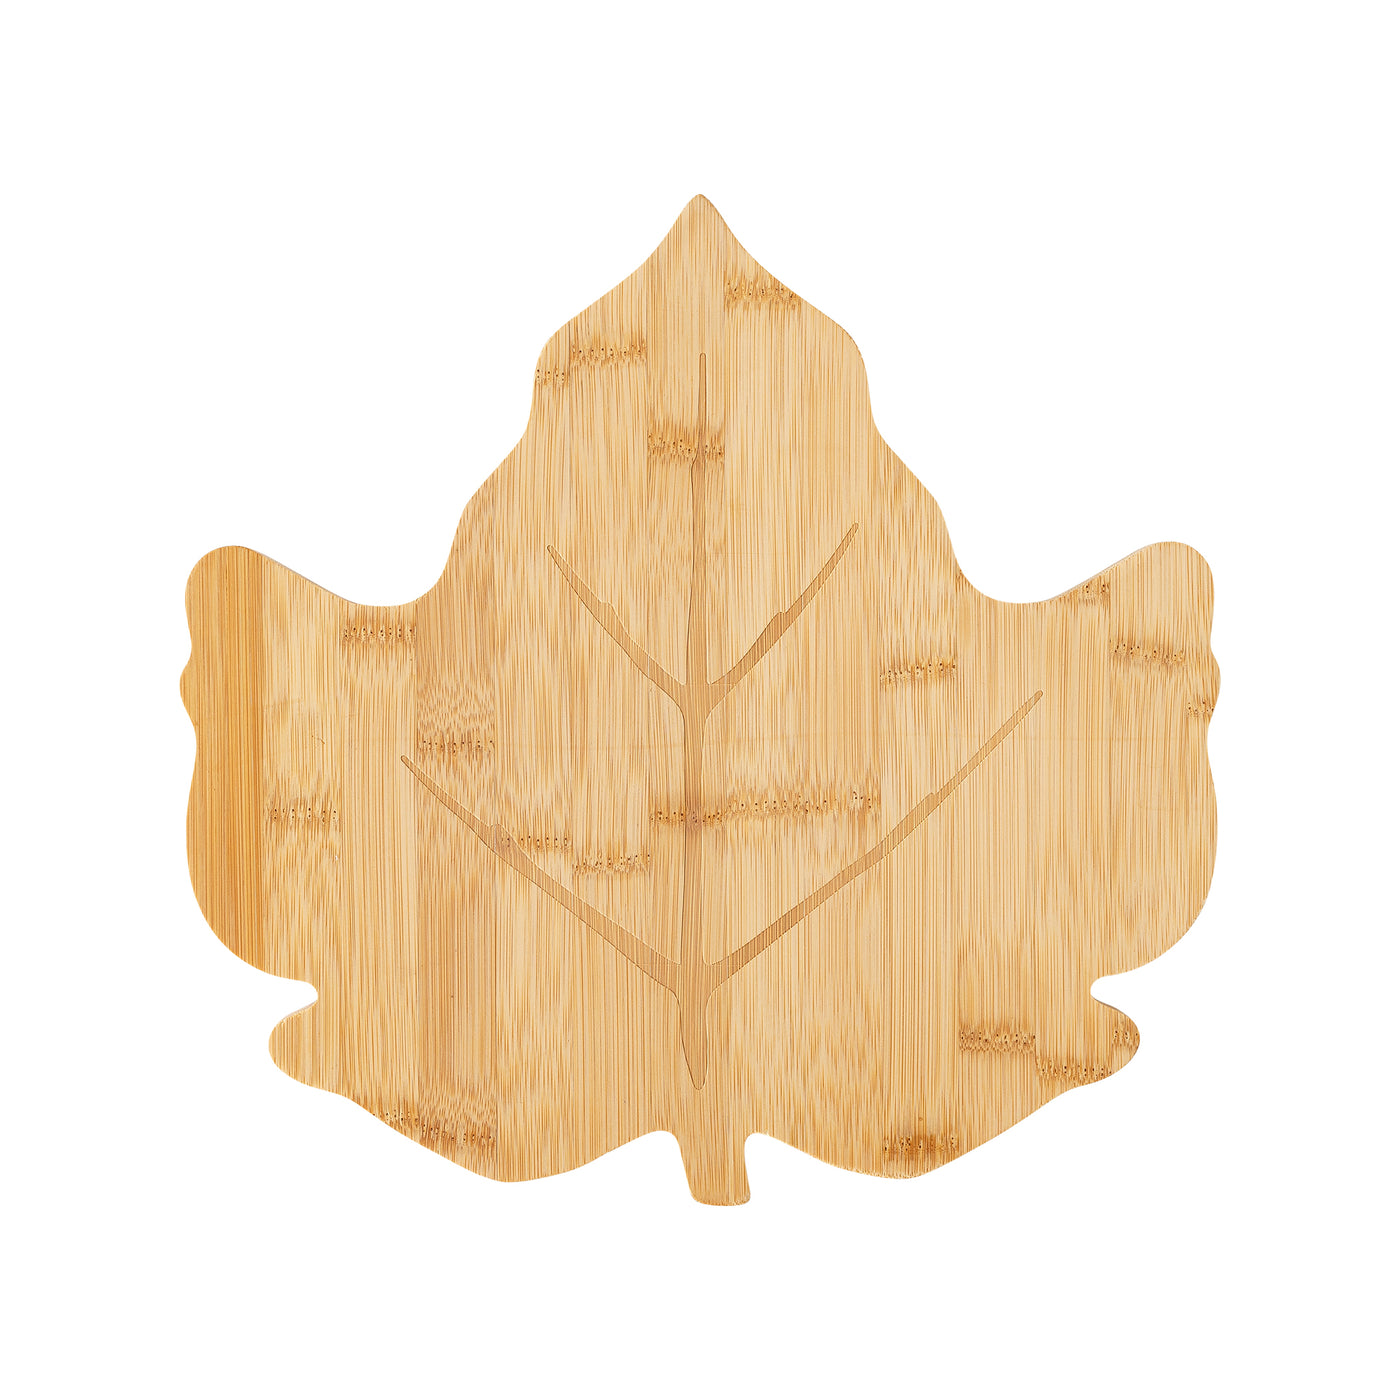 THP1129 - Leaf Wood Board